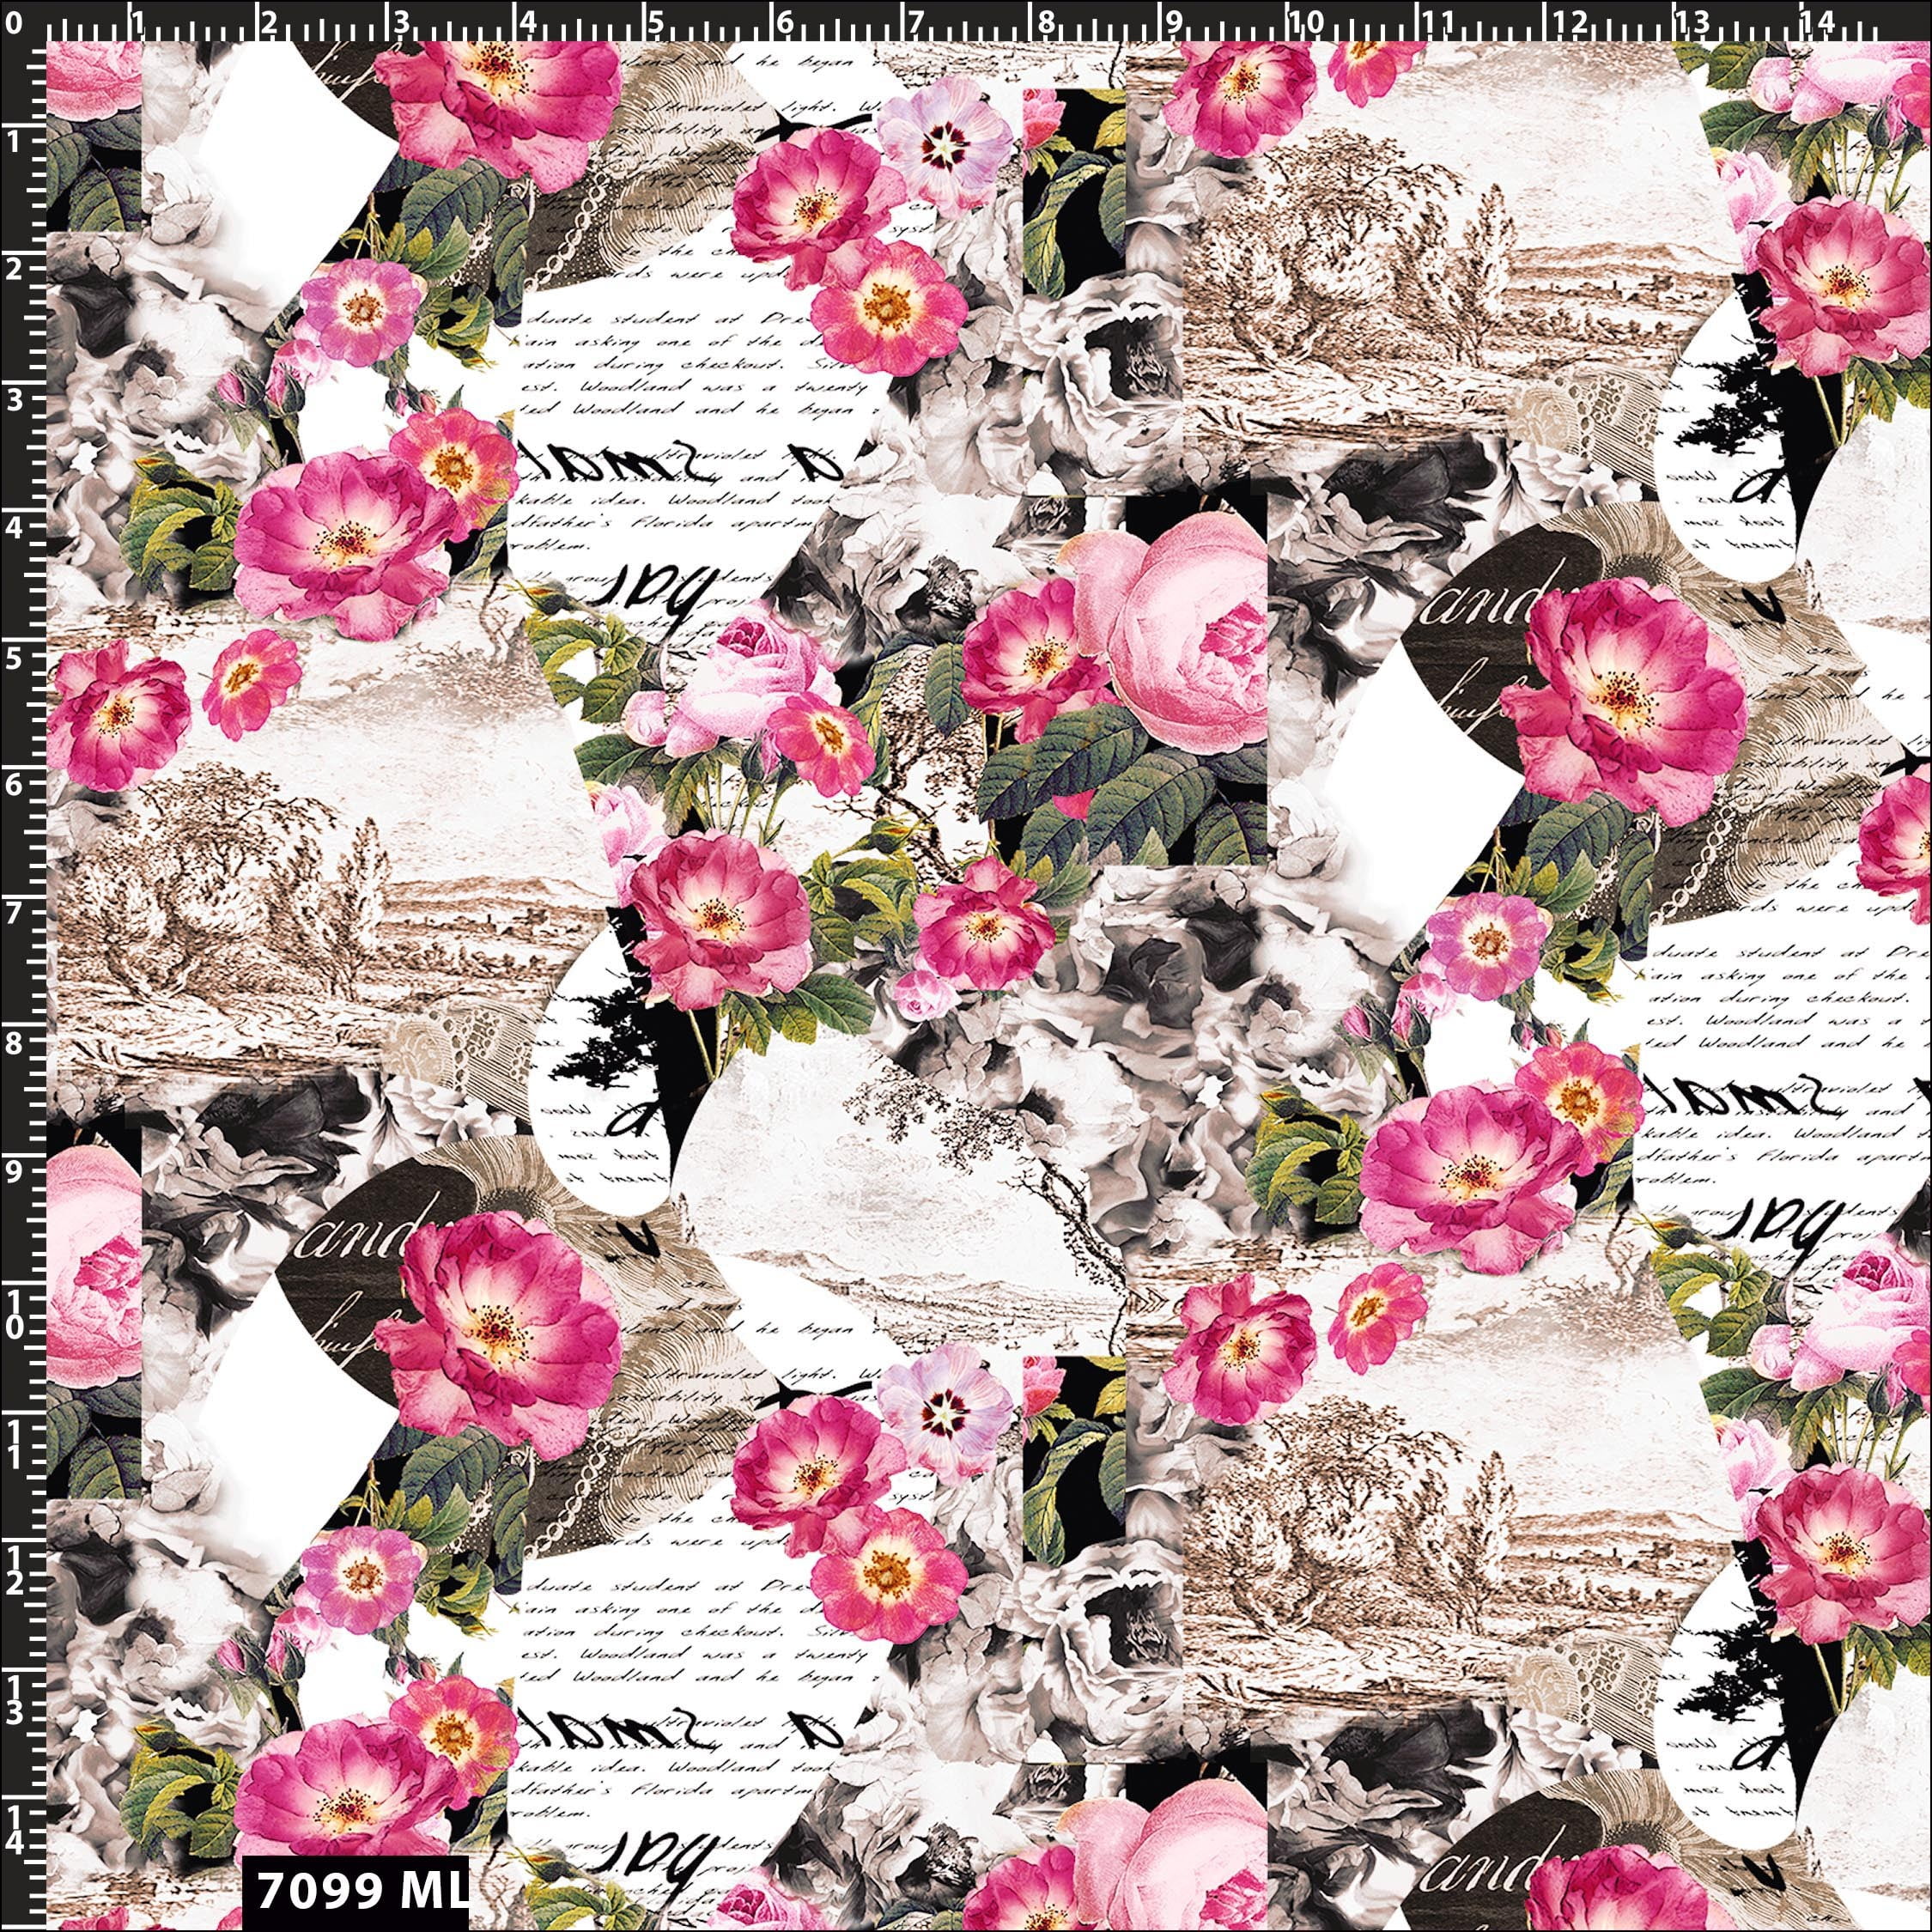 Peony Seamless pattern Floral Scrapbook Floral Digital Paper